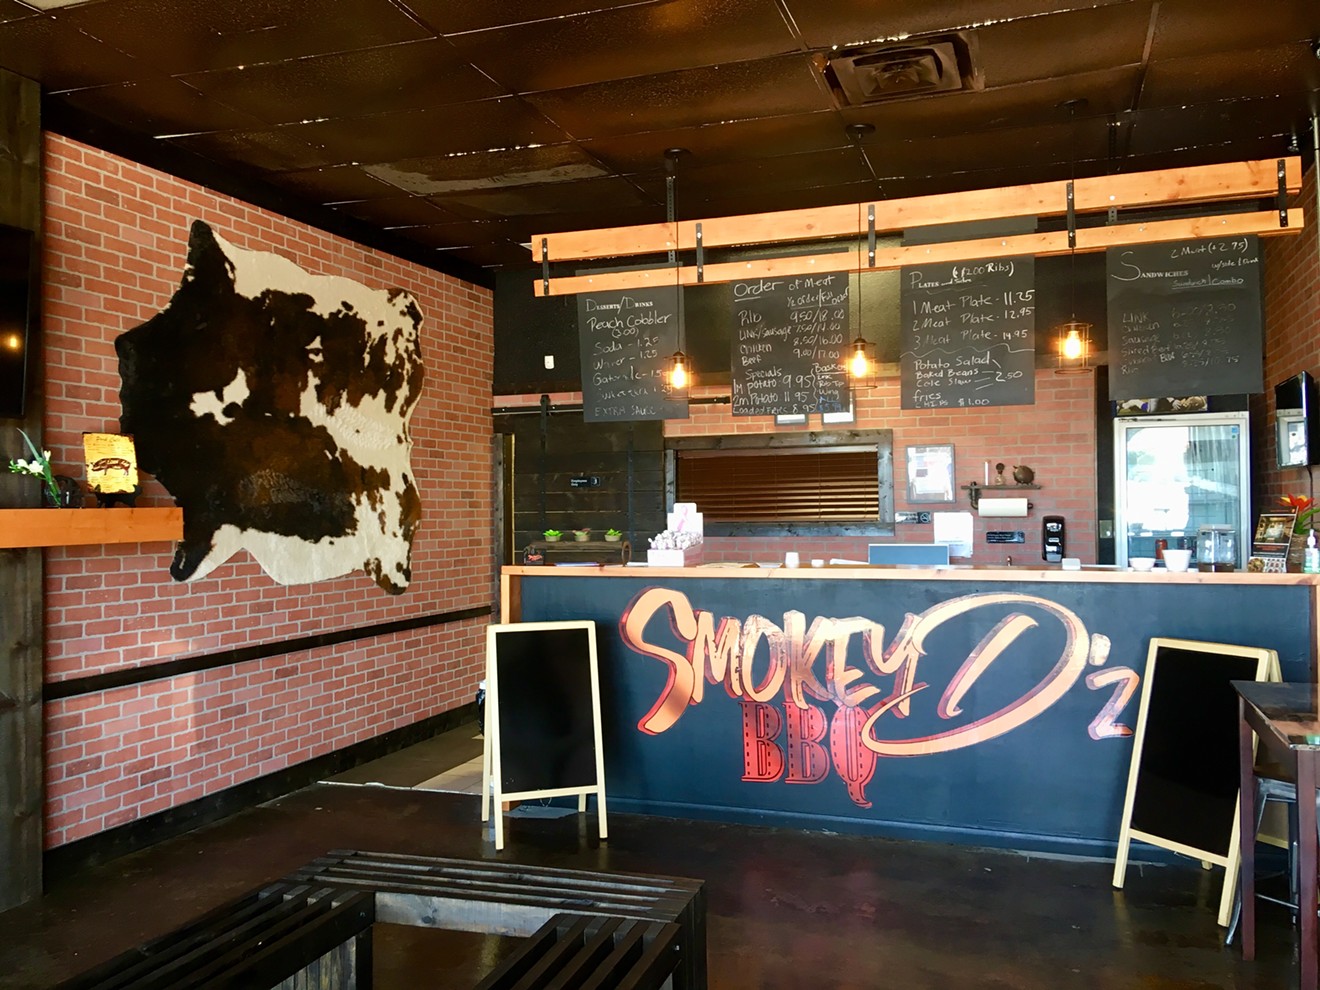 The interior at Smokey D'Z BBQ.